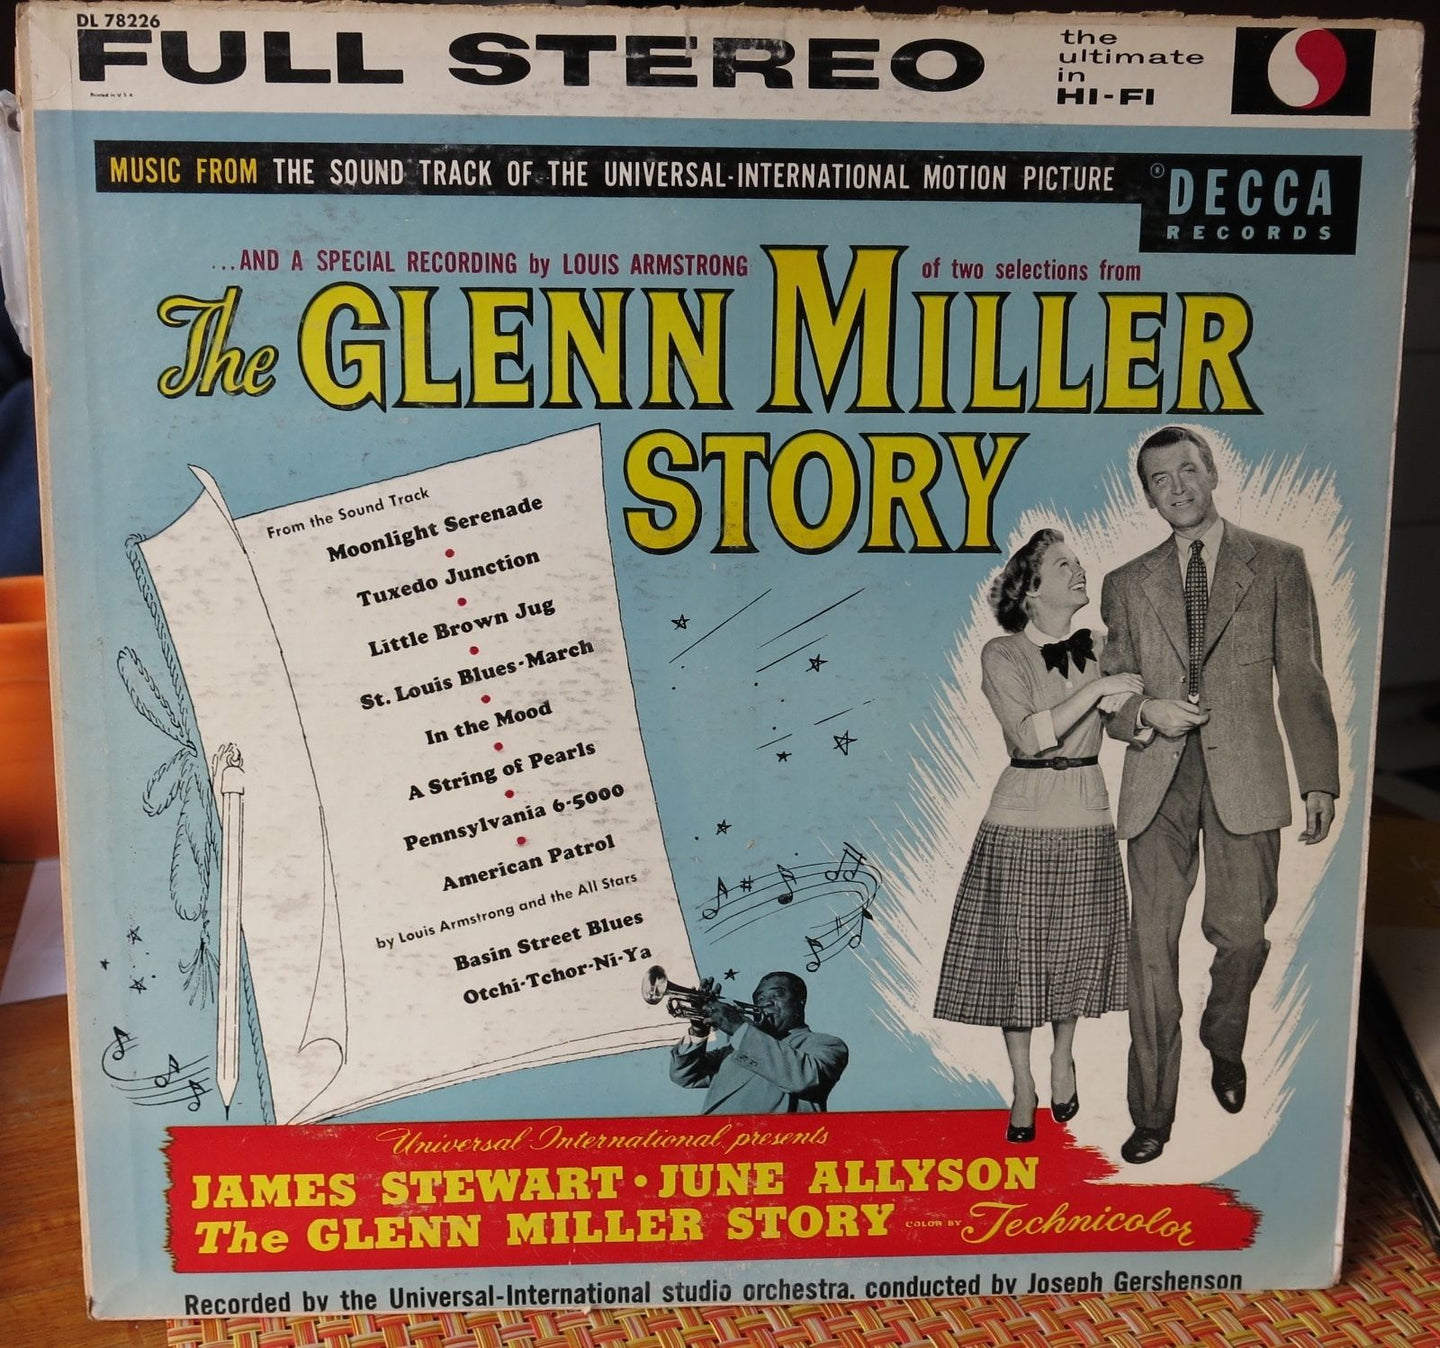 The Glenn Miller Story - Soundtrack LP 1954 - Decca